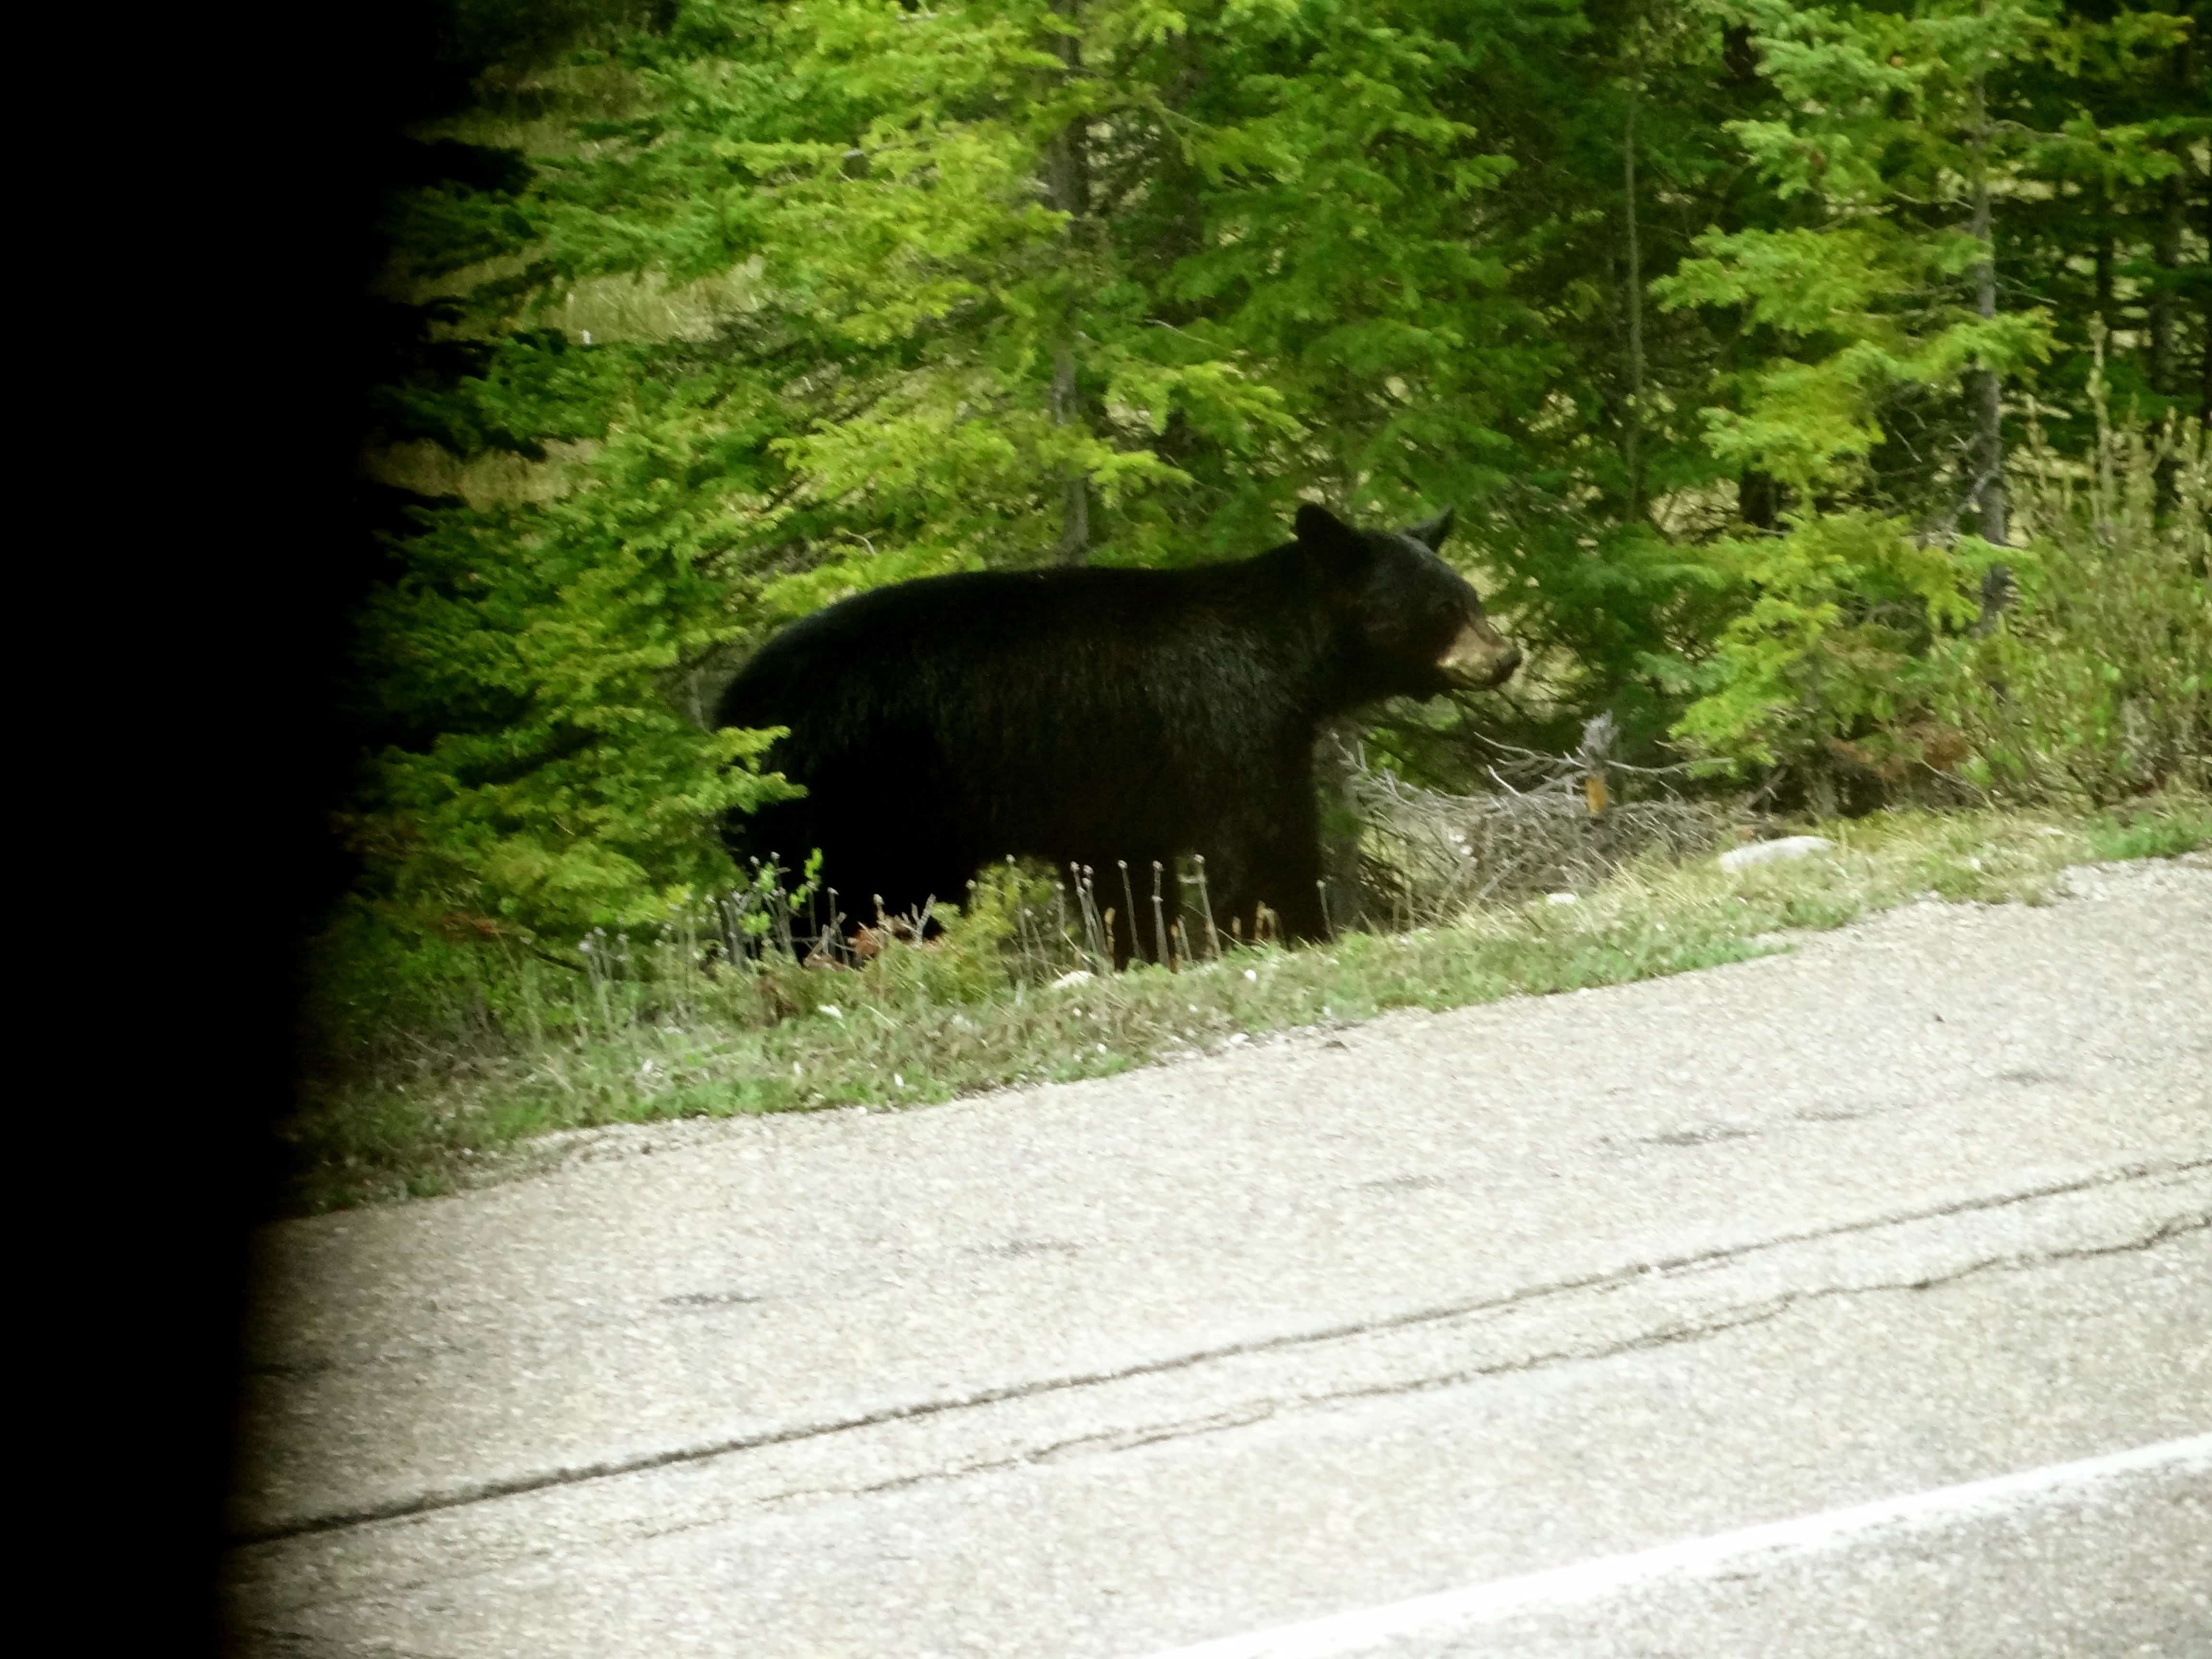 Black bear photos, pictures of black bears, Jasper wildlife